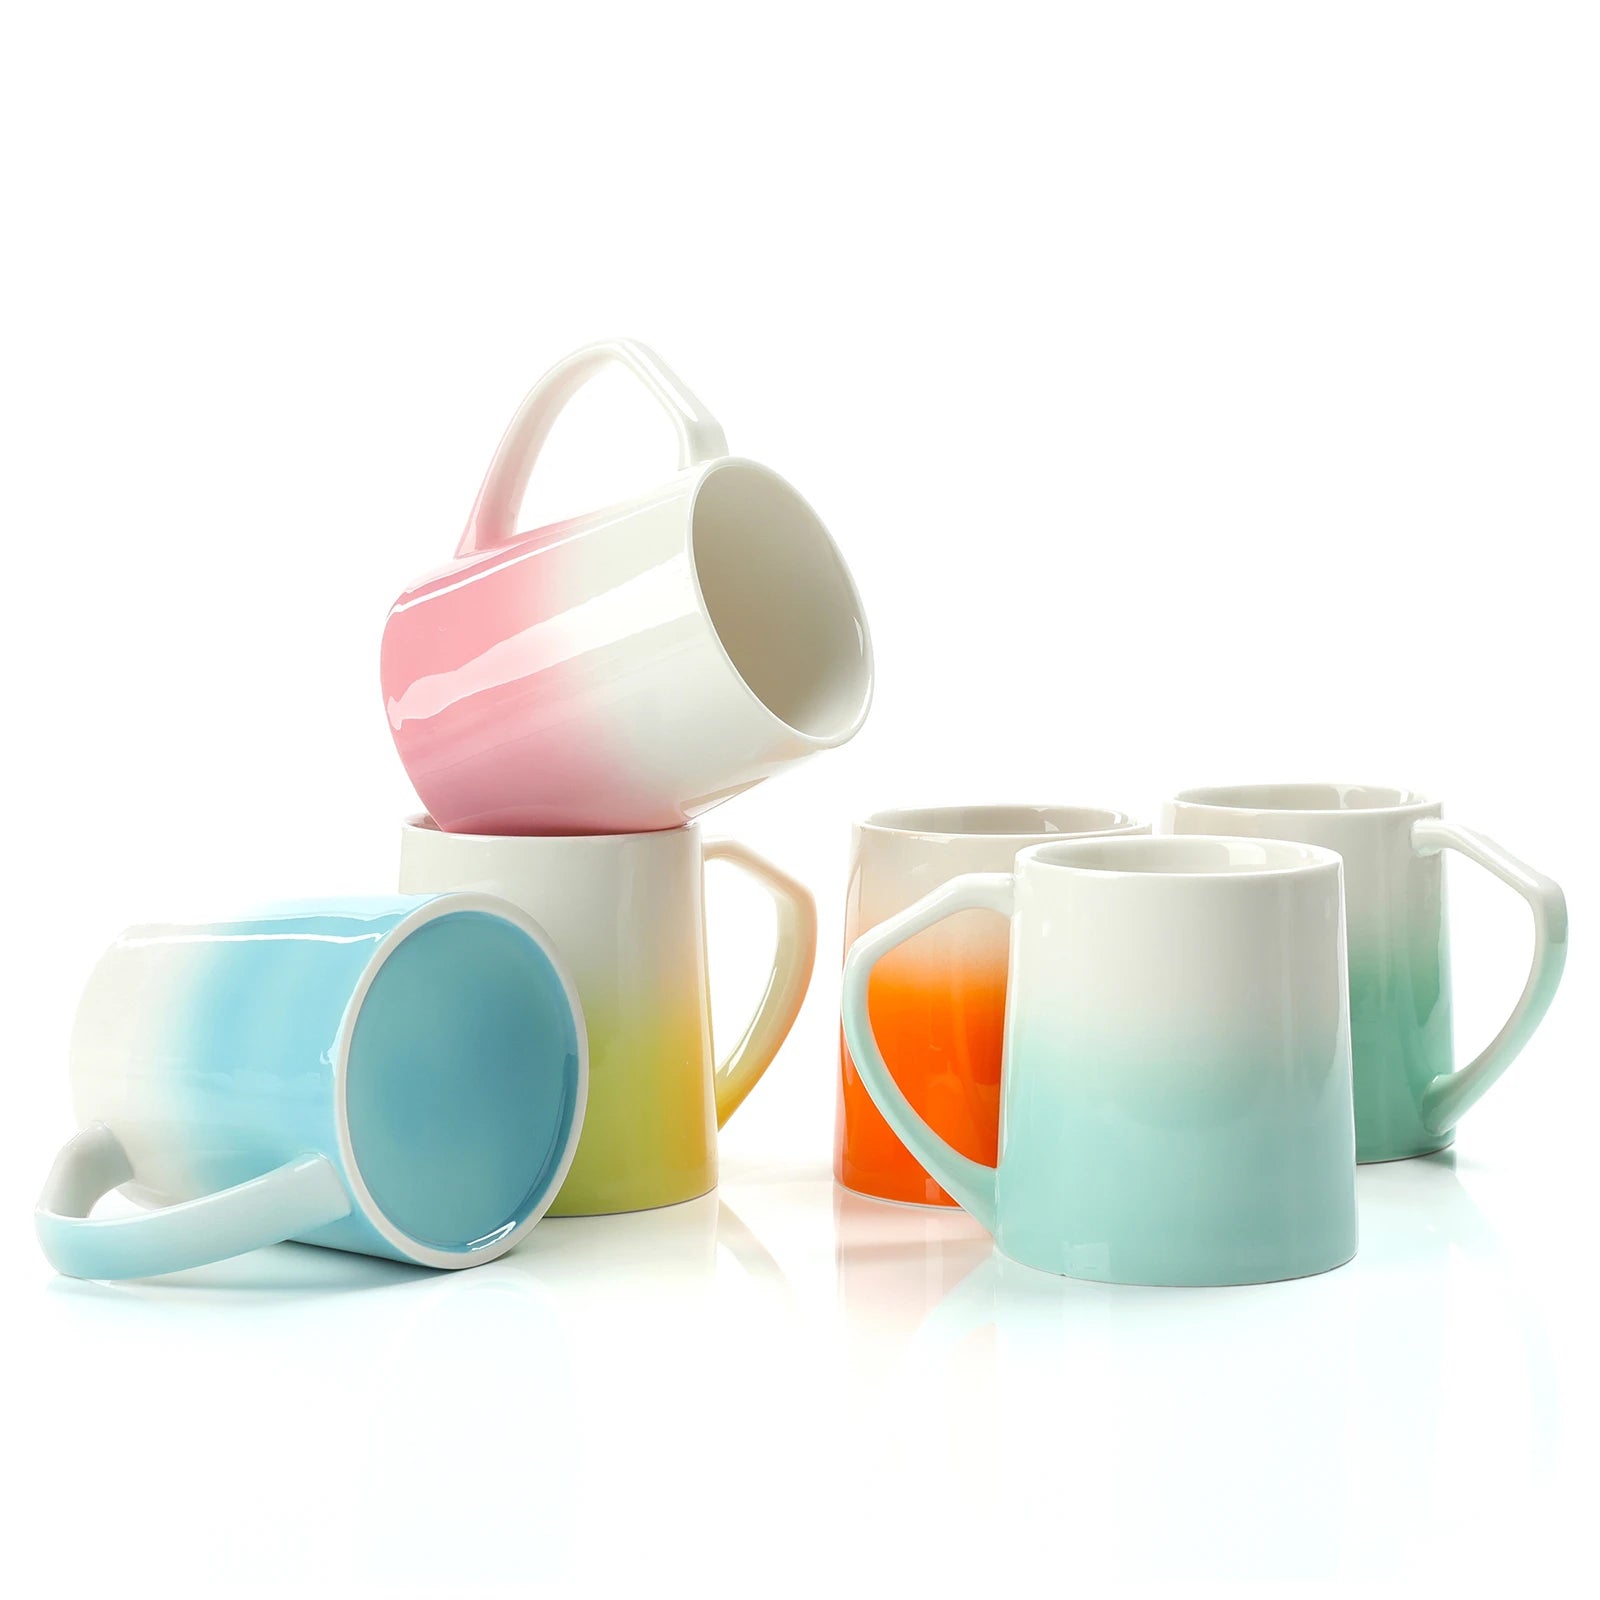  thexxlmug Coffee Mugs 16oz set of 6, Ceramics Coffee Cups for  Latte, Hot Tea, Cappuccino, Mocha, Cocoa Turquoise, Tea, Dishwasher, Oven,  Microwave safe, White : Home & Kitchen